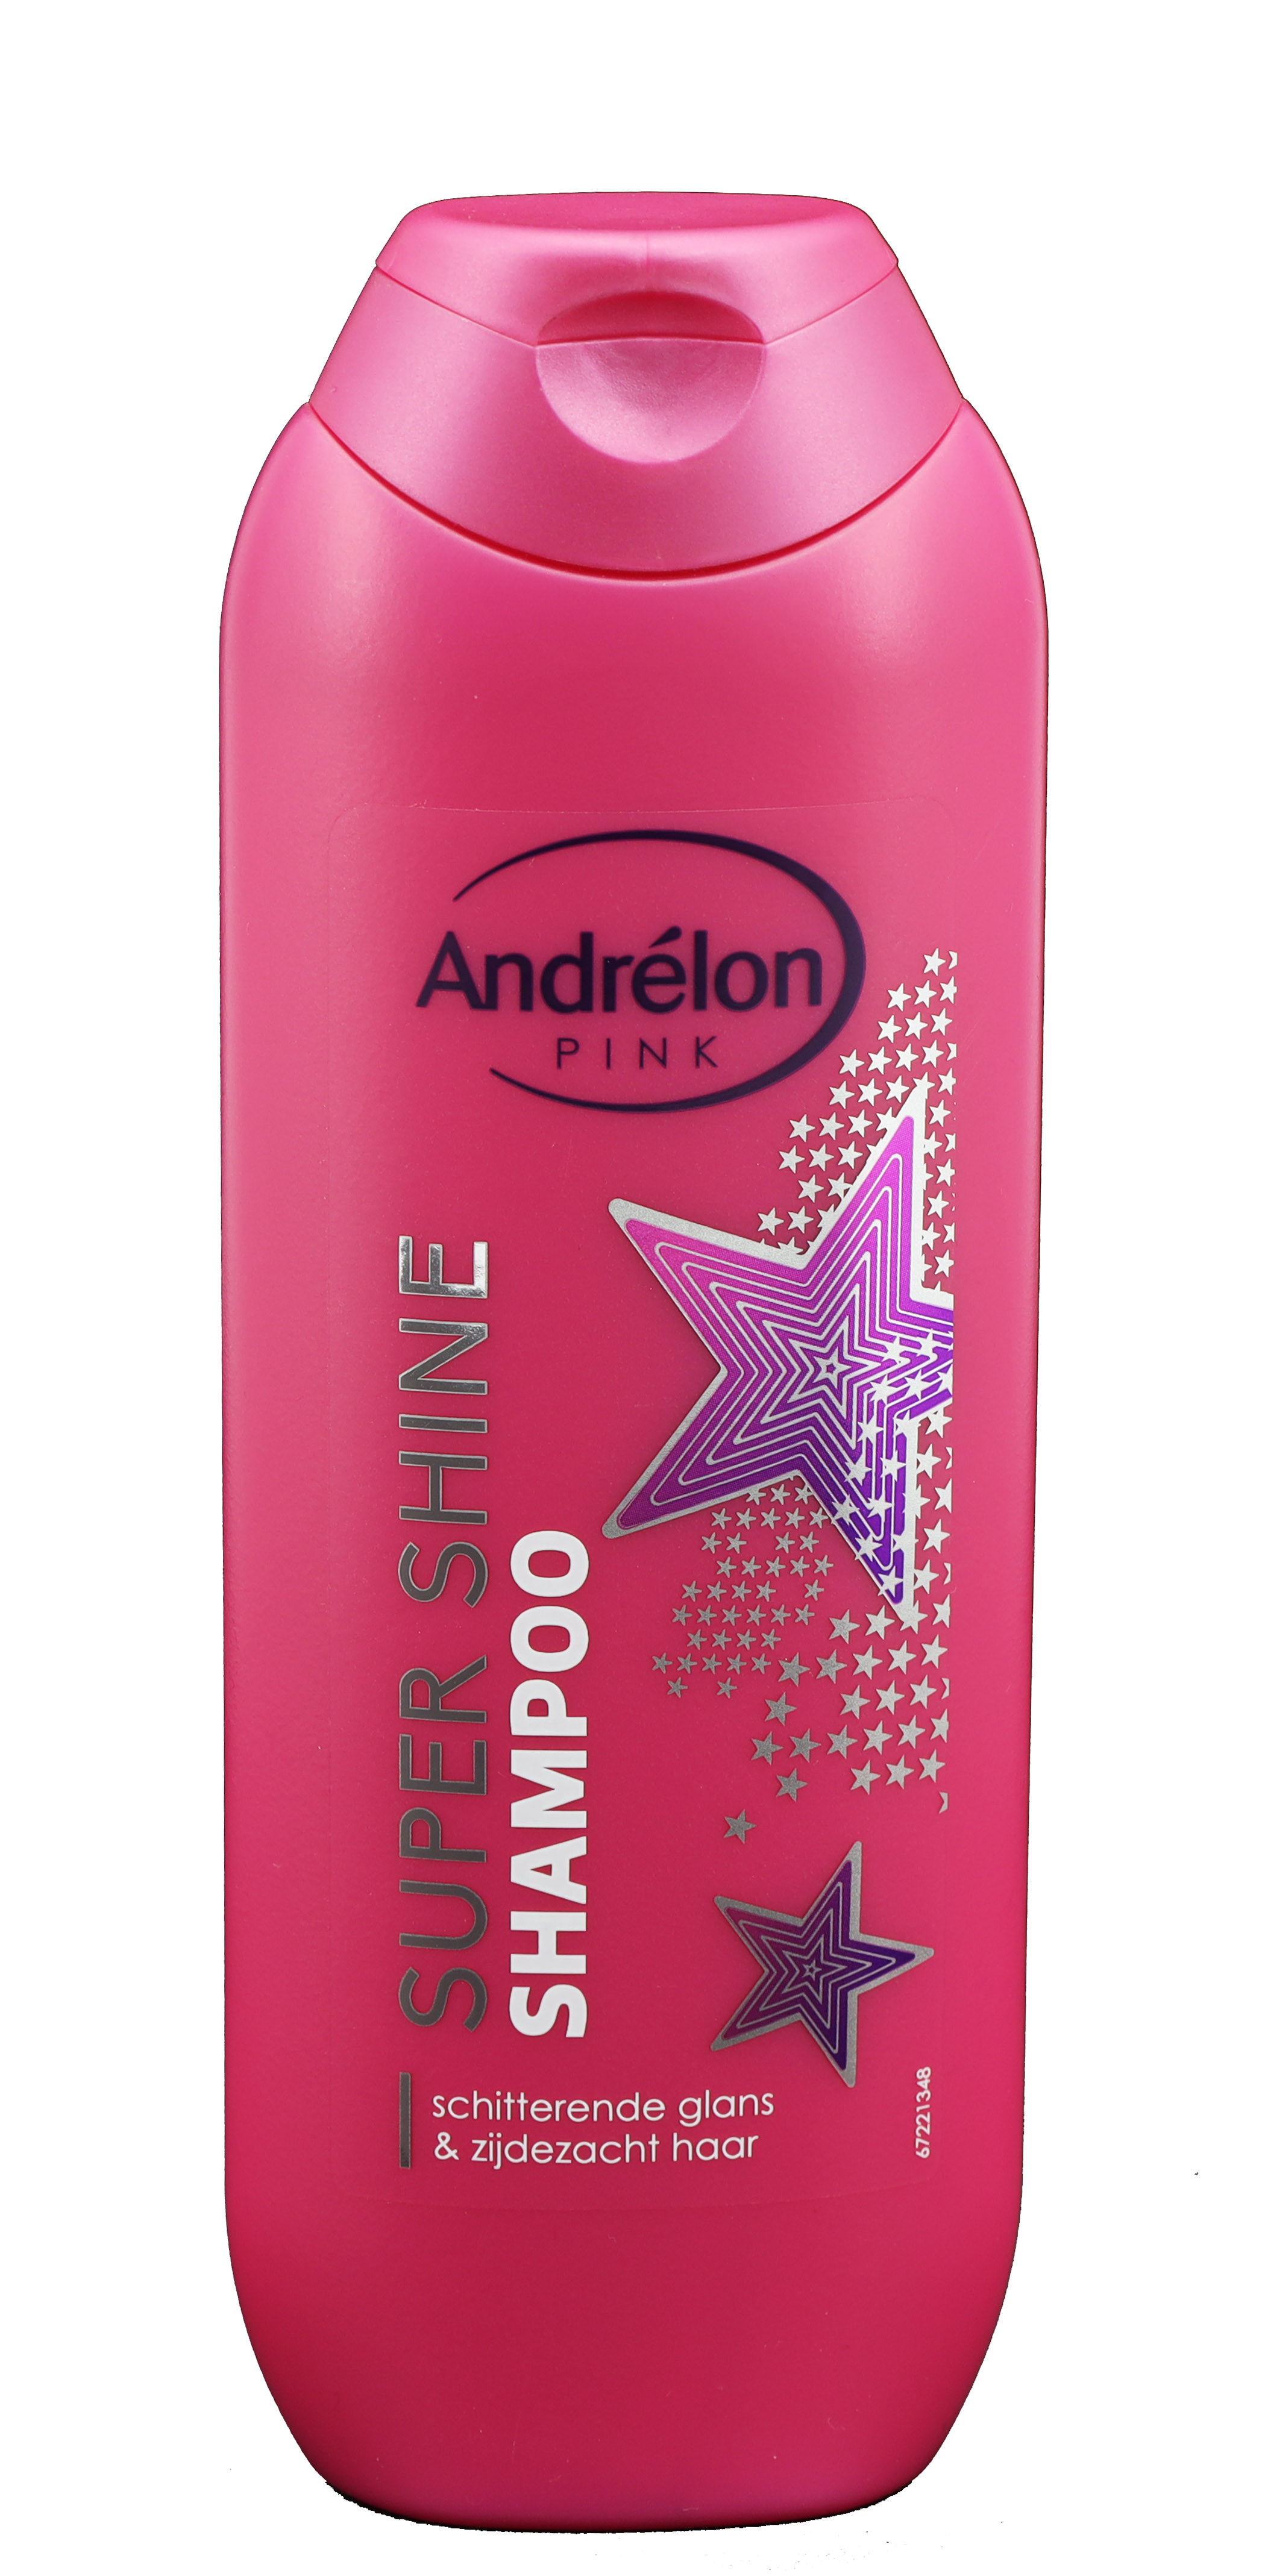 Andrelon Shampoo Brillanter Glanz & seidig weiches Haar 250ml